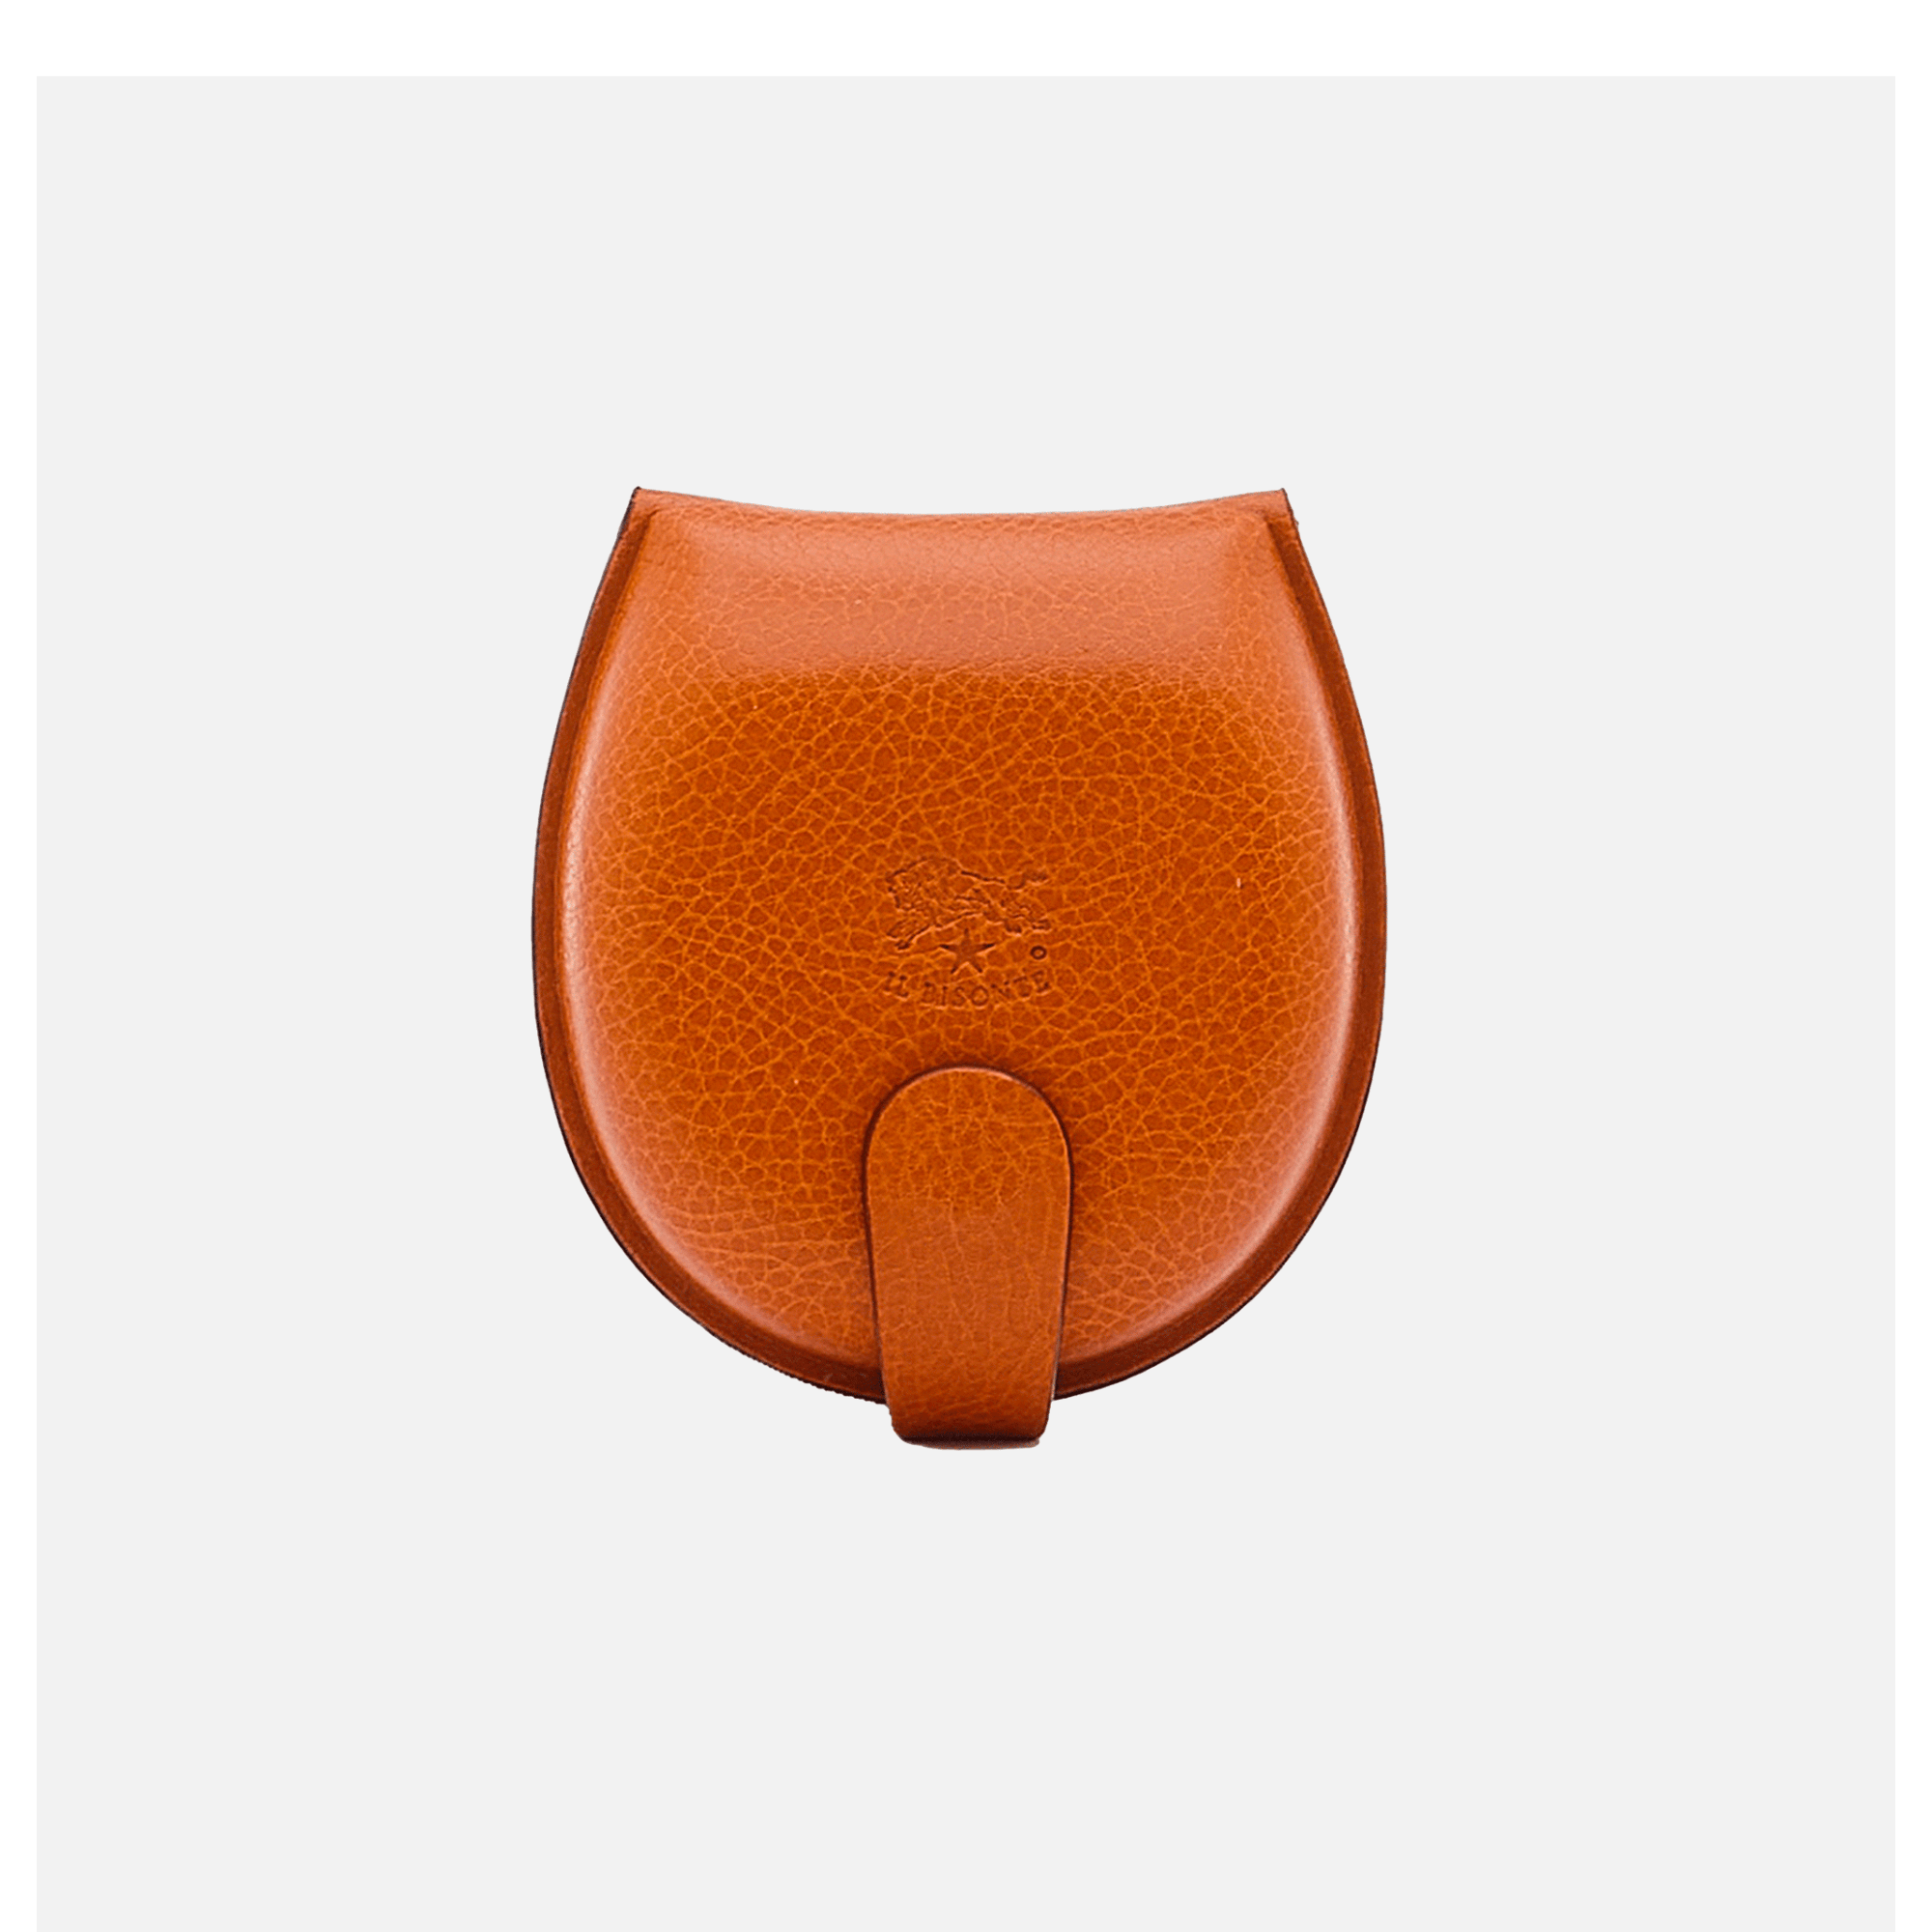 Italian Leather Pelle Studio Coin Purse | Leather coin purse, Leather, Italian  leather